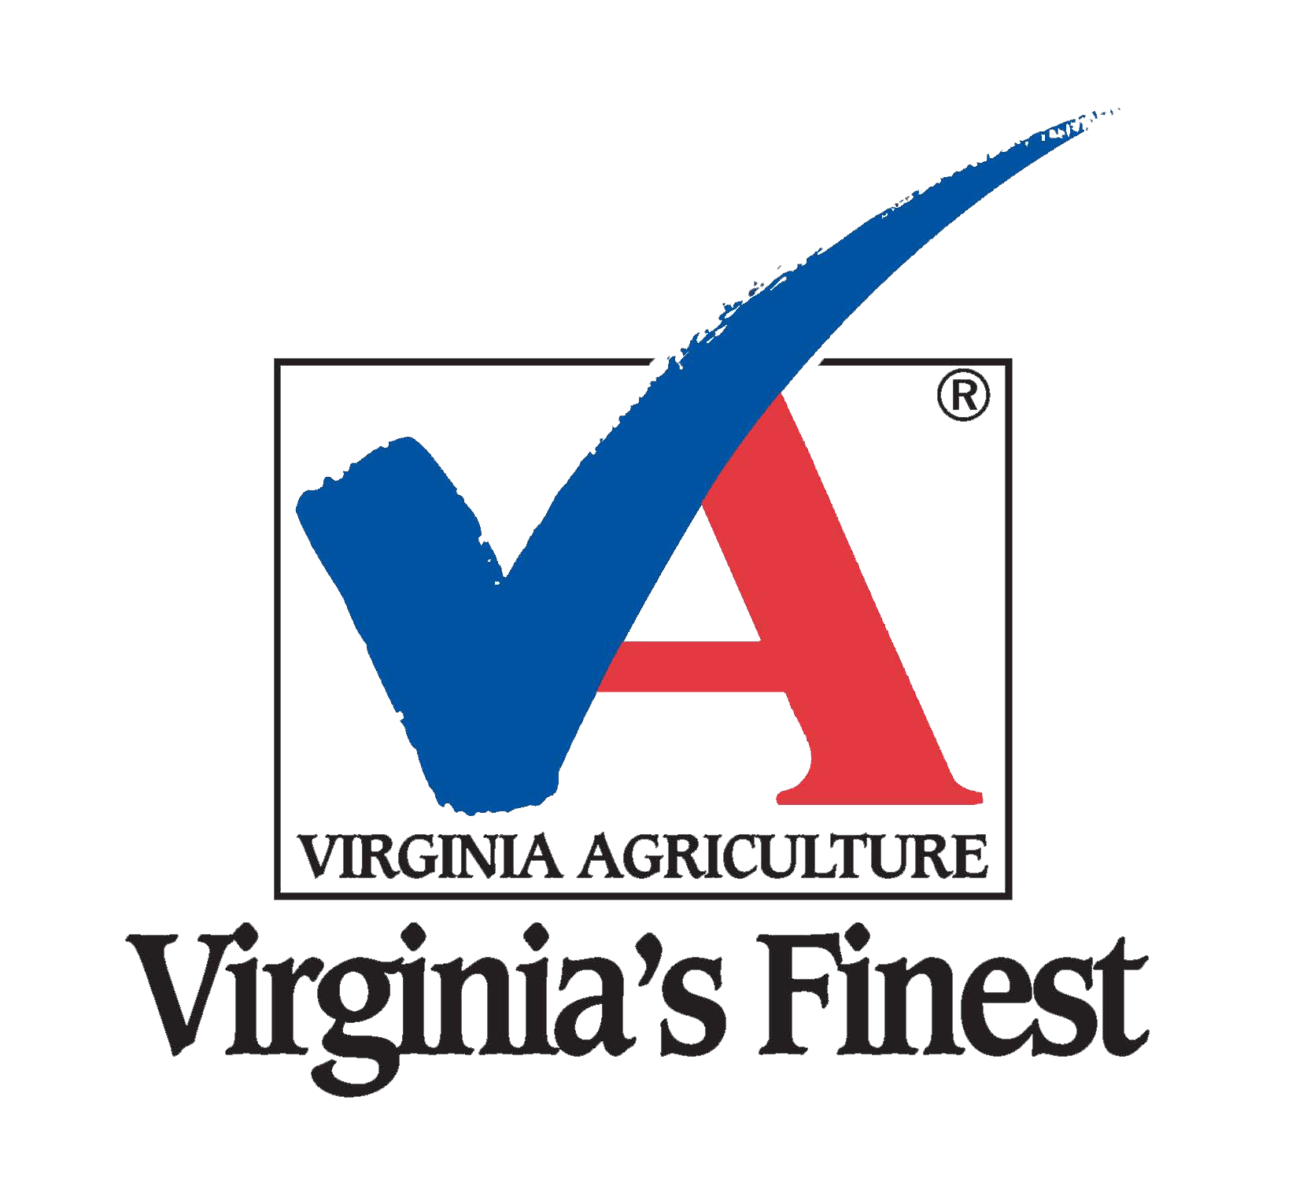 Virginia'a Finest